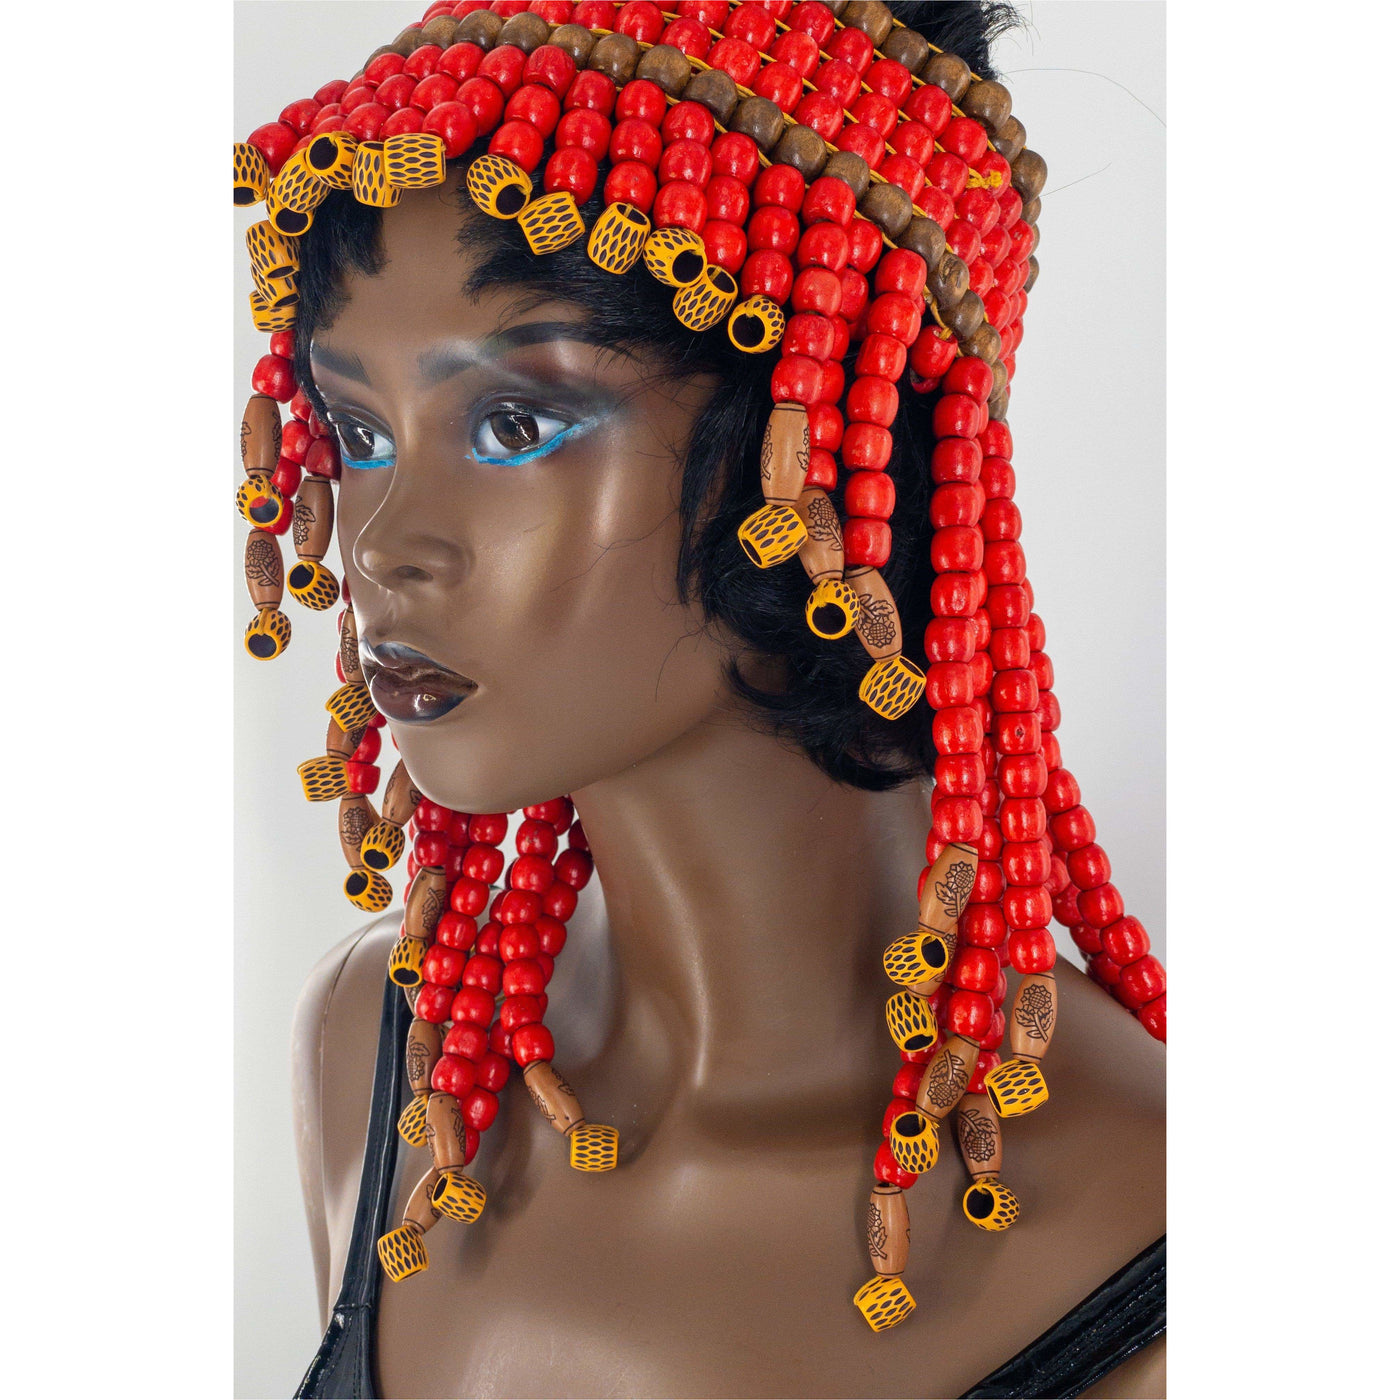 Queen of Egypt Wooden beads Headpiece - Trufacebygrace